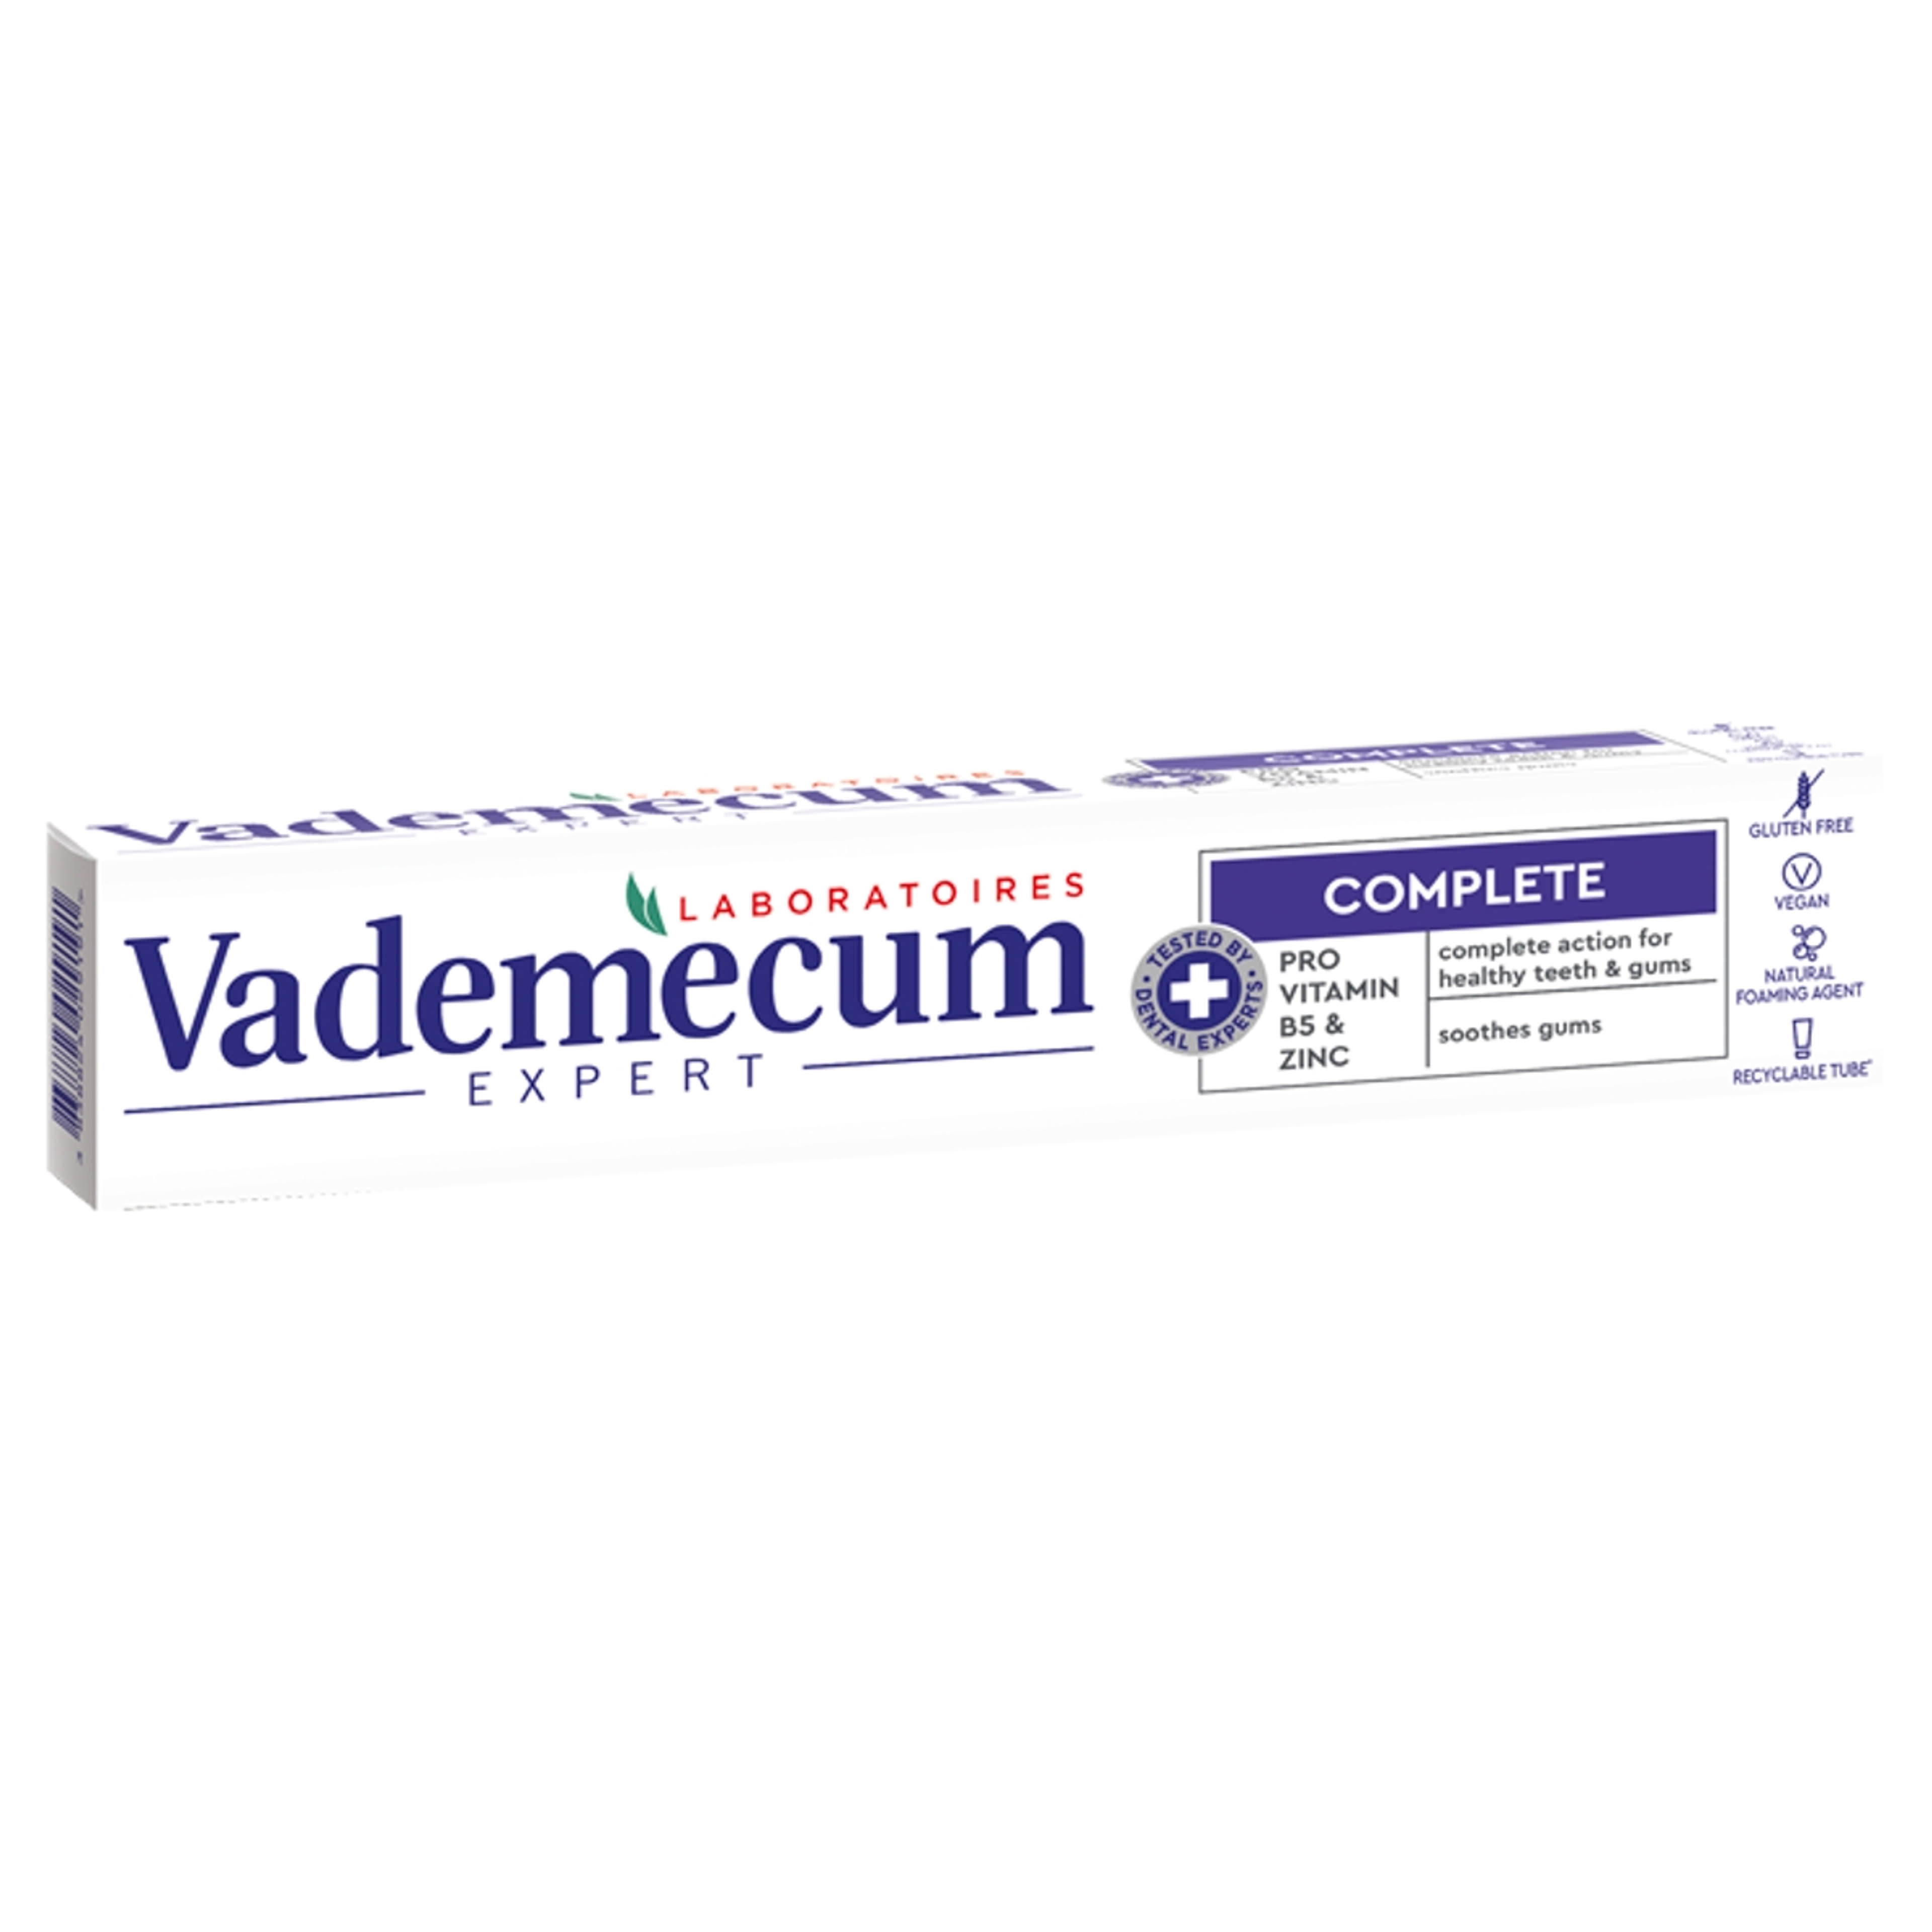 Vademecum Expert Pro Vitamin Complete fogkrém - 75 ml-1